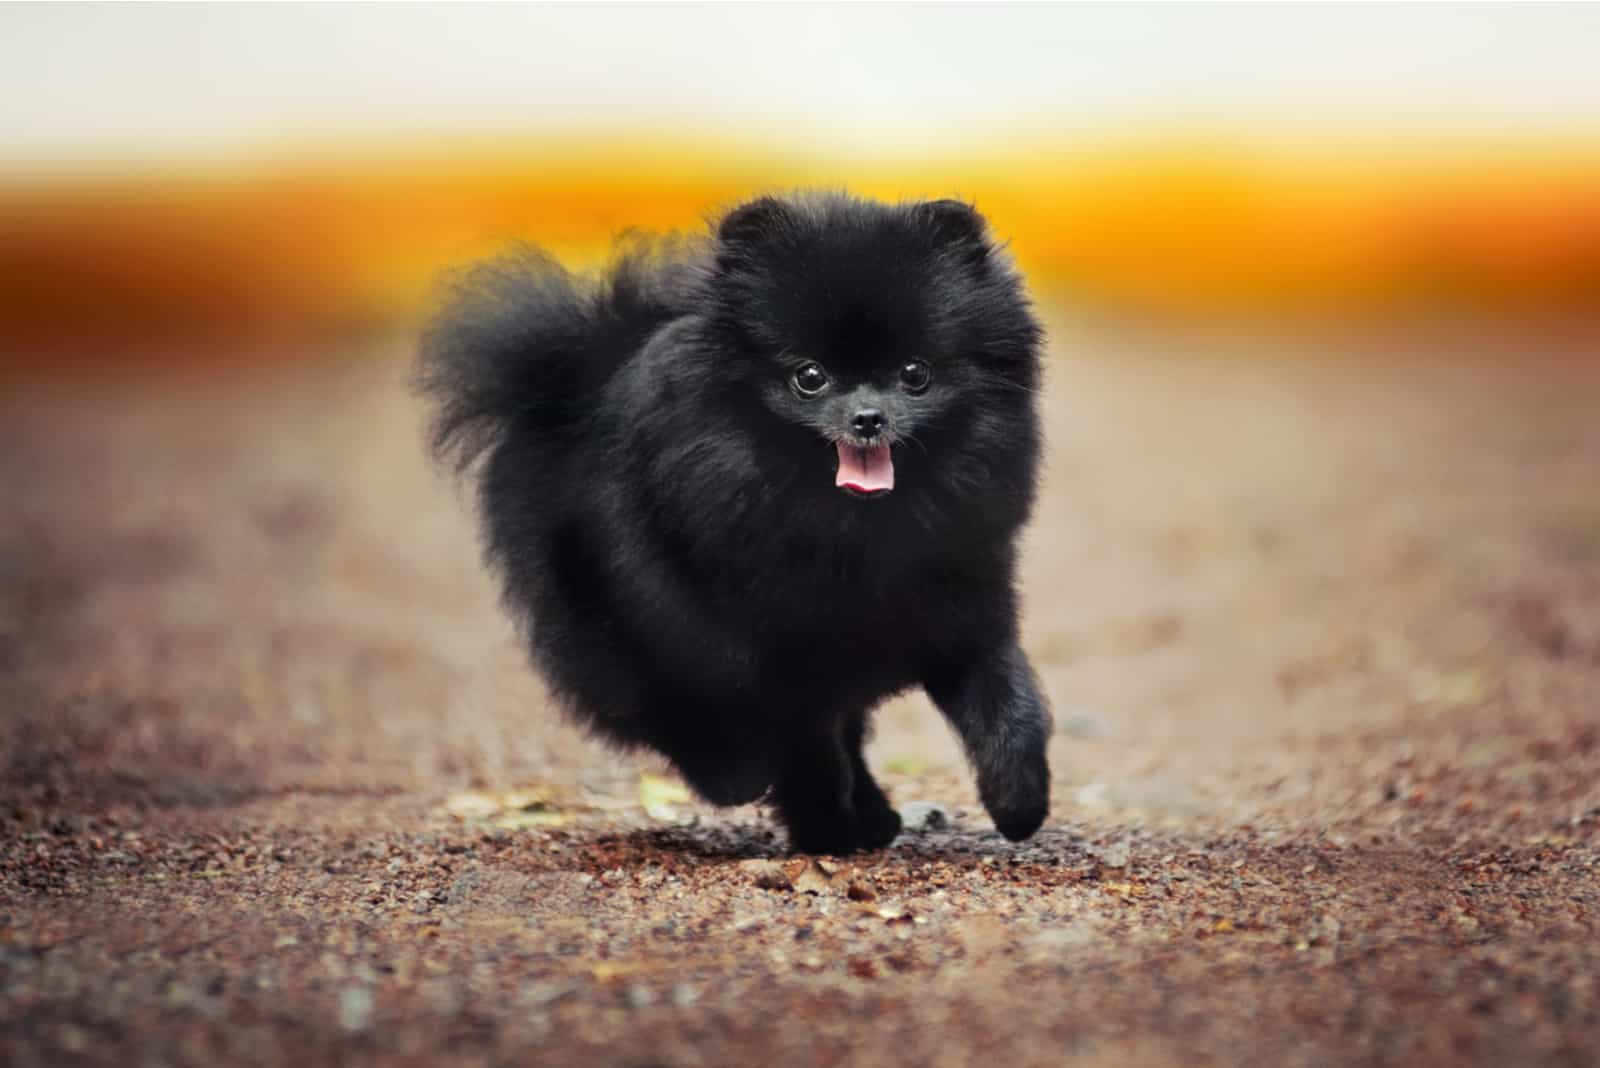 Pomeranian dog outdoor